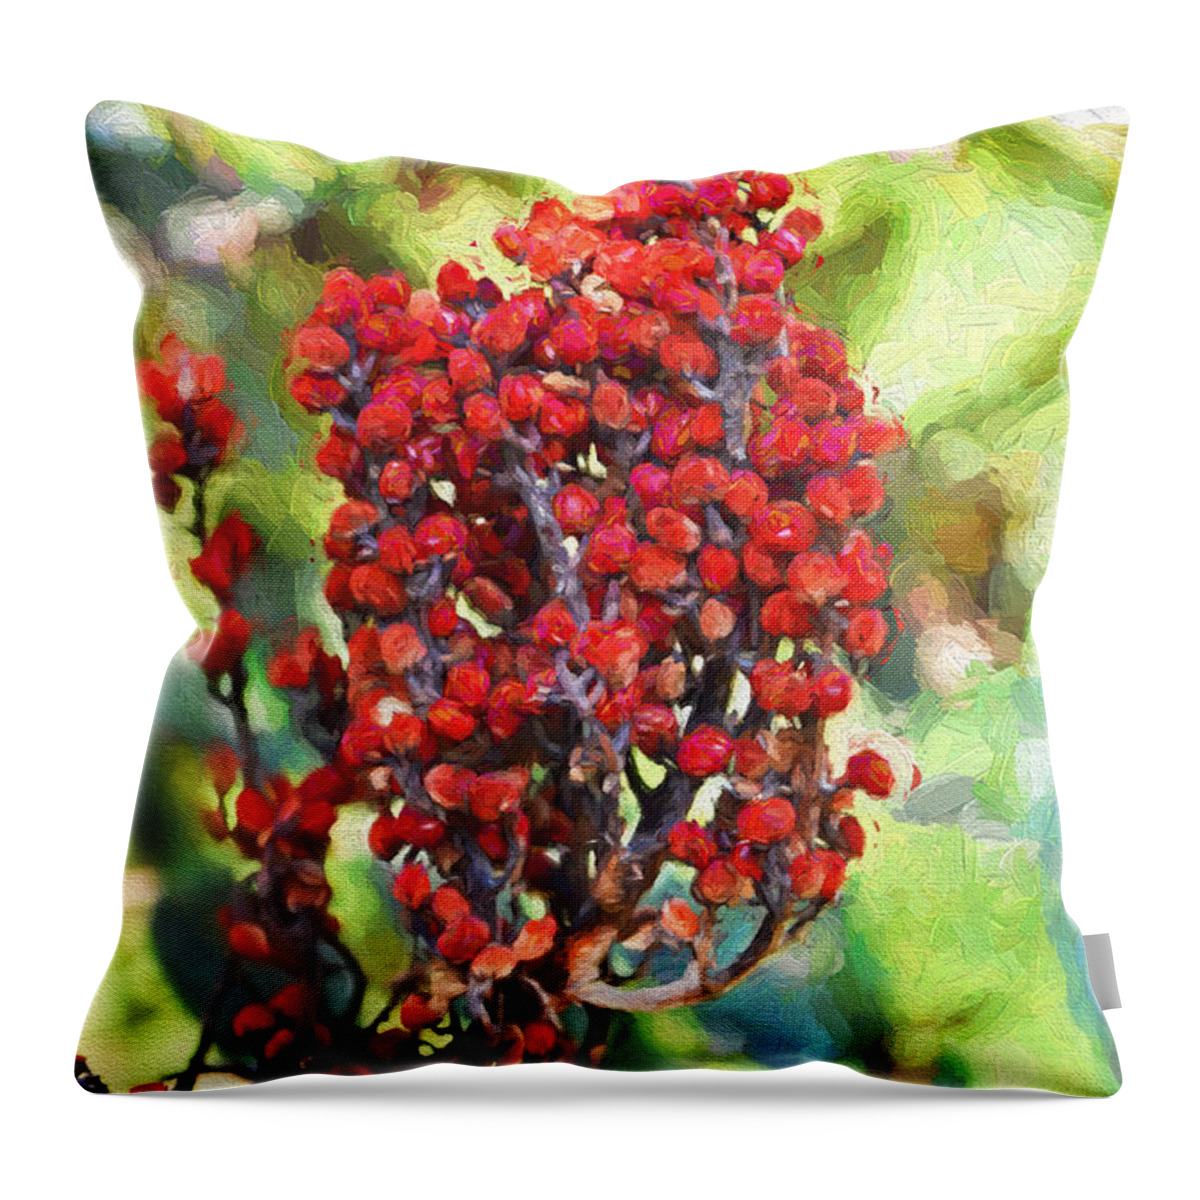 Botanical Throw Pillow featuring the photograph Autumn Sumac Fruit - Digital Paint by Debbie Portwood